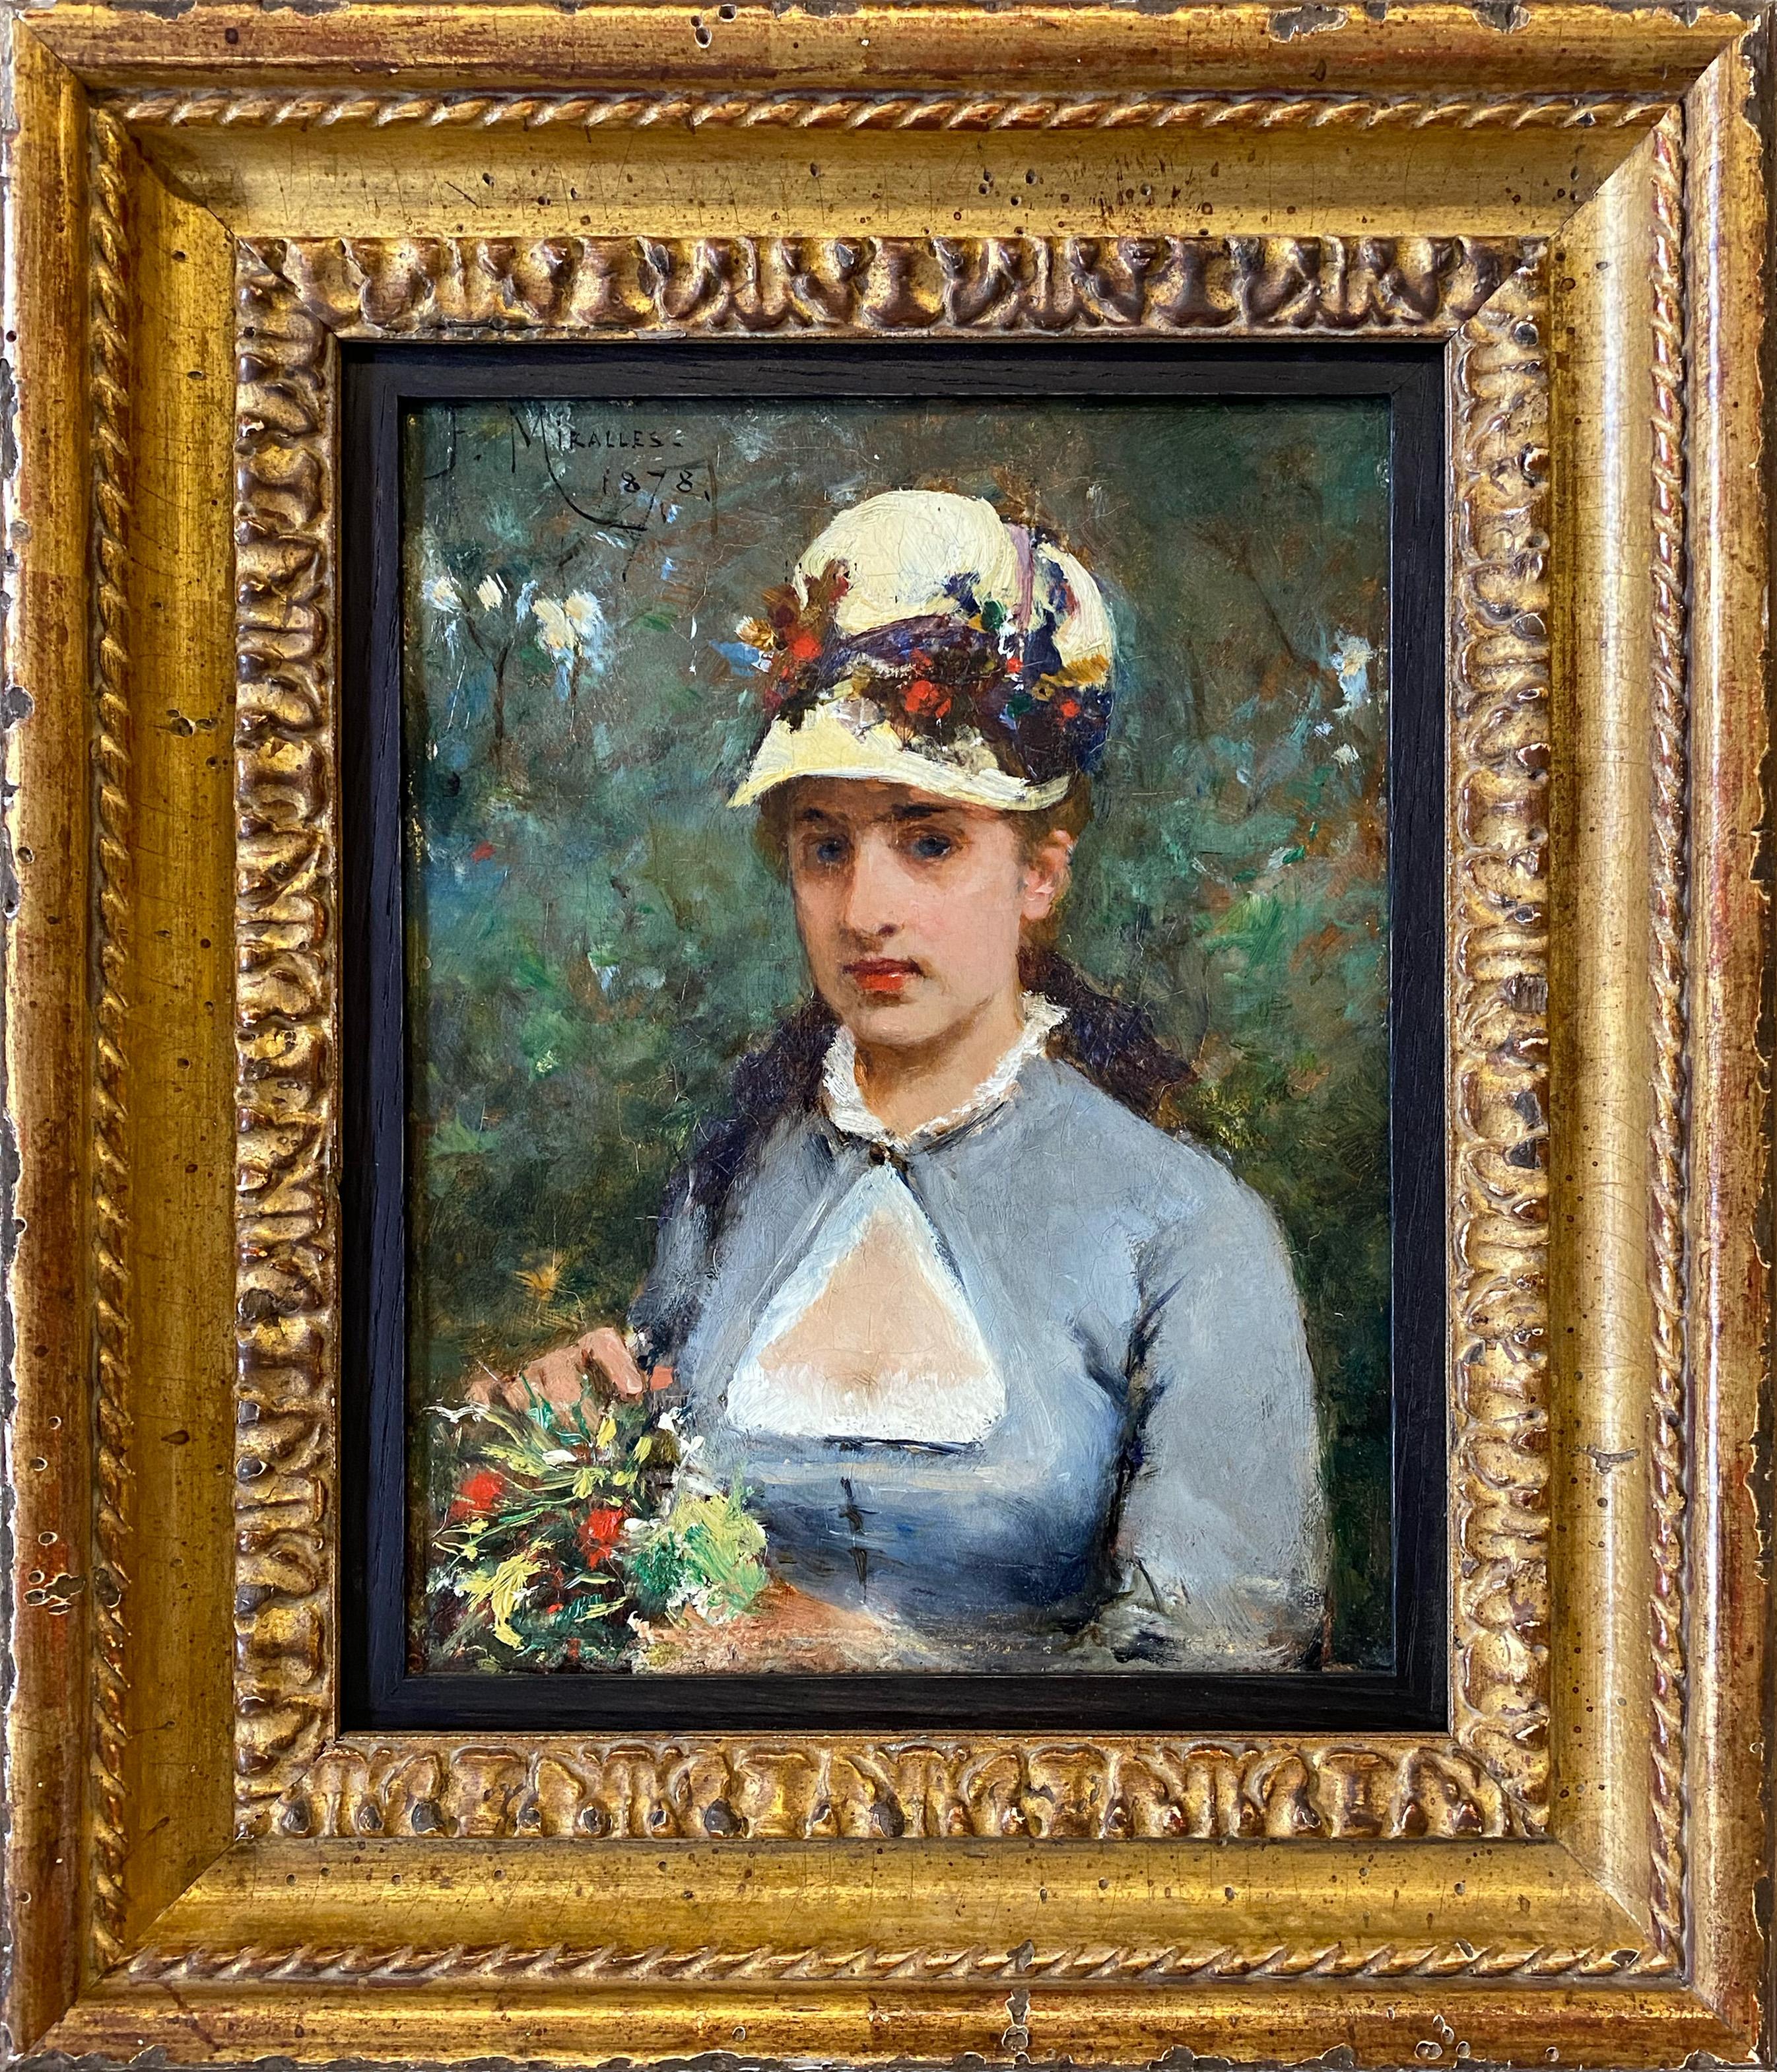 Francisco Miralles y Galup Portrait Painting - The little bouquet